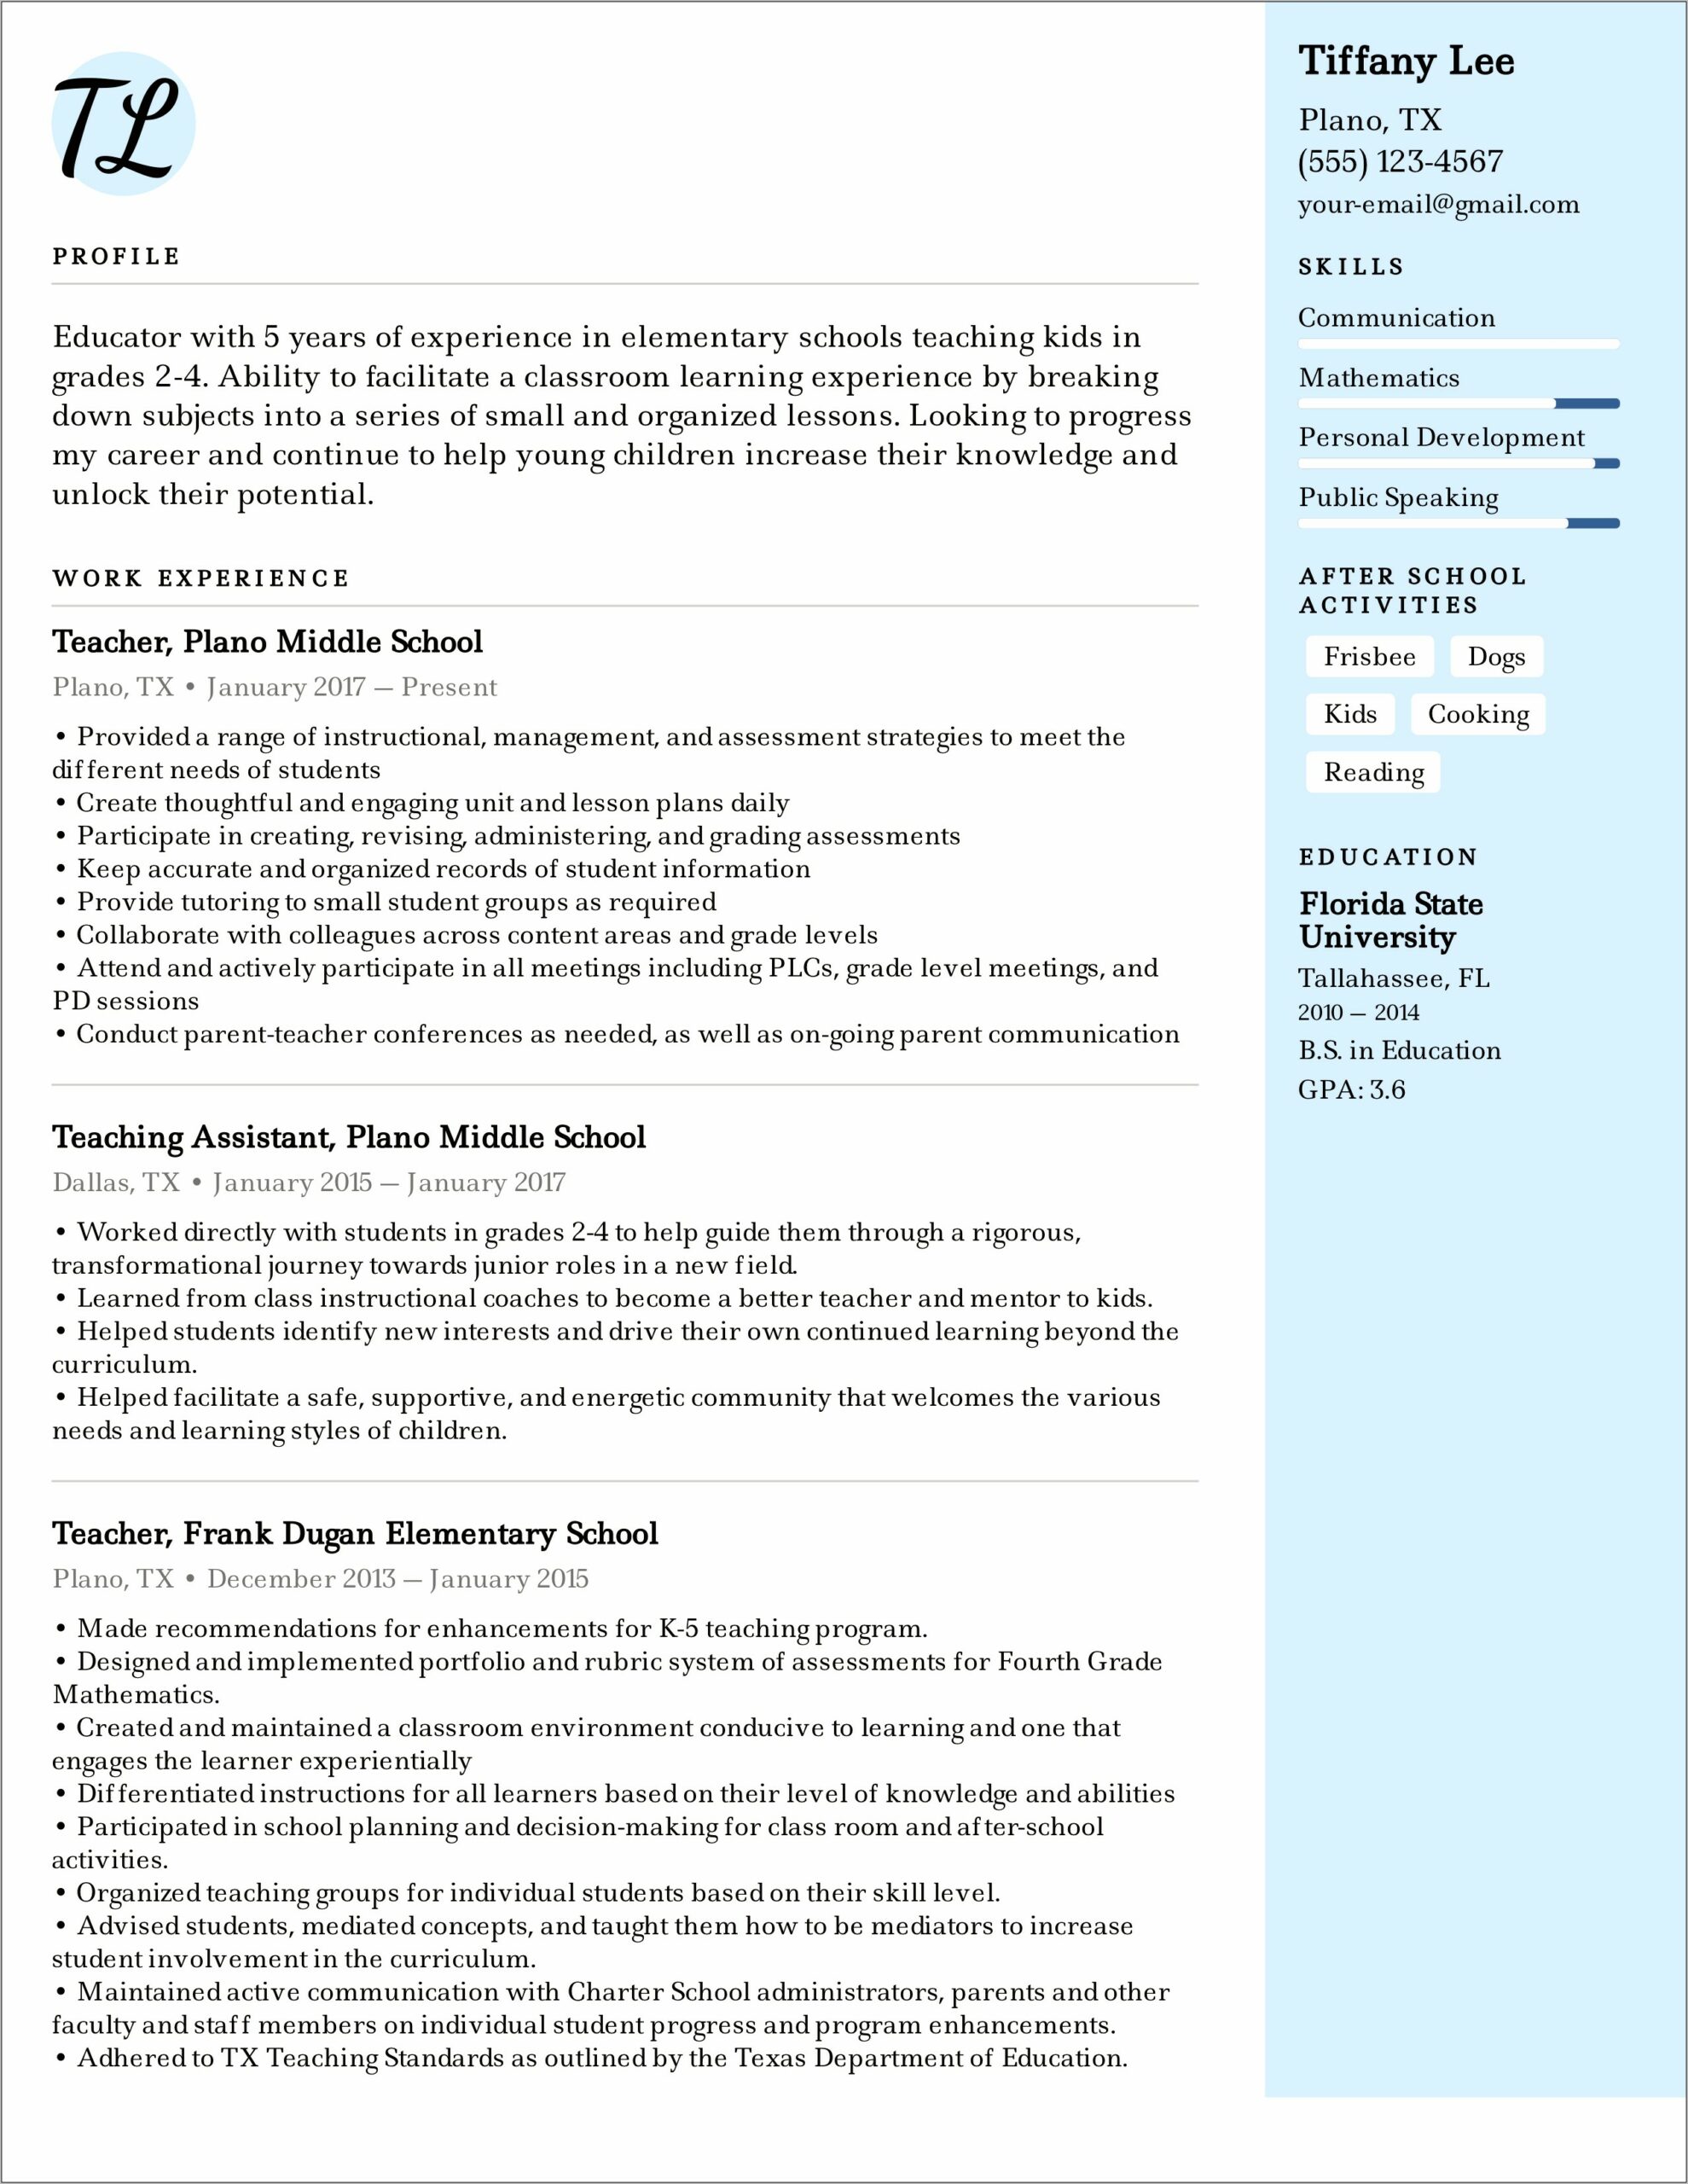 Sample Resume For Elementary School Librarian